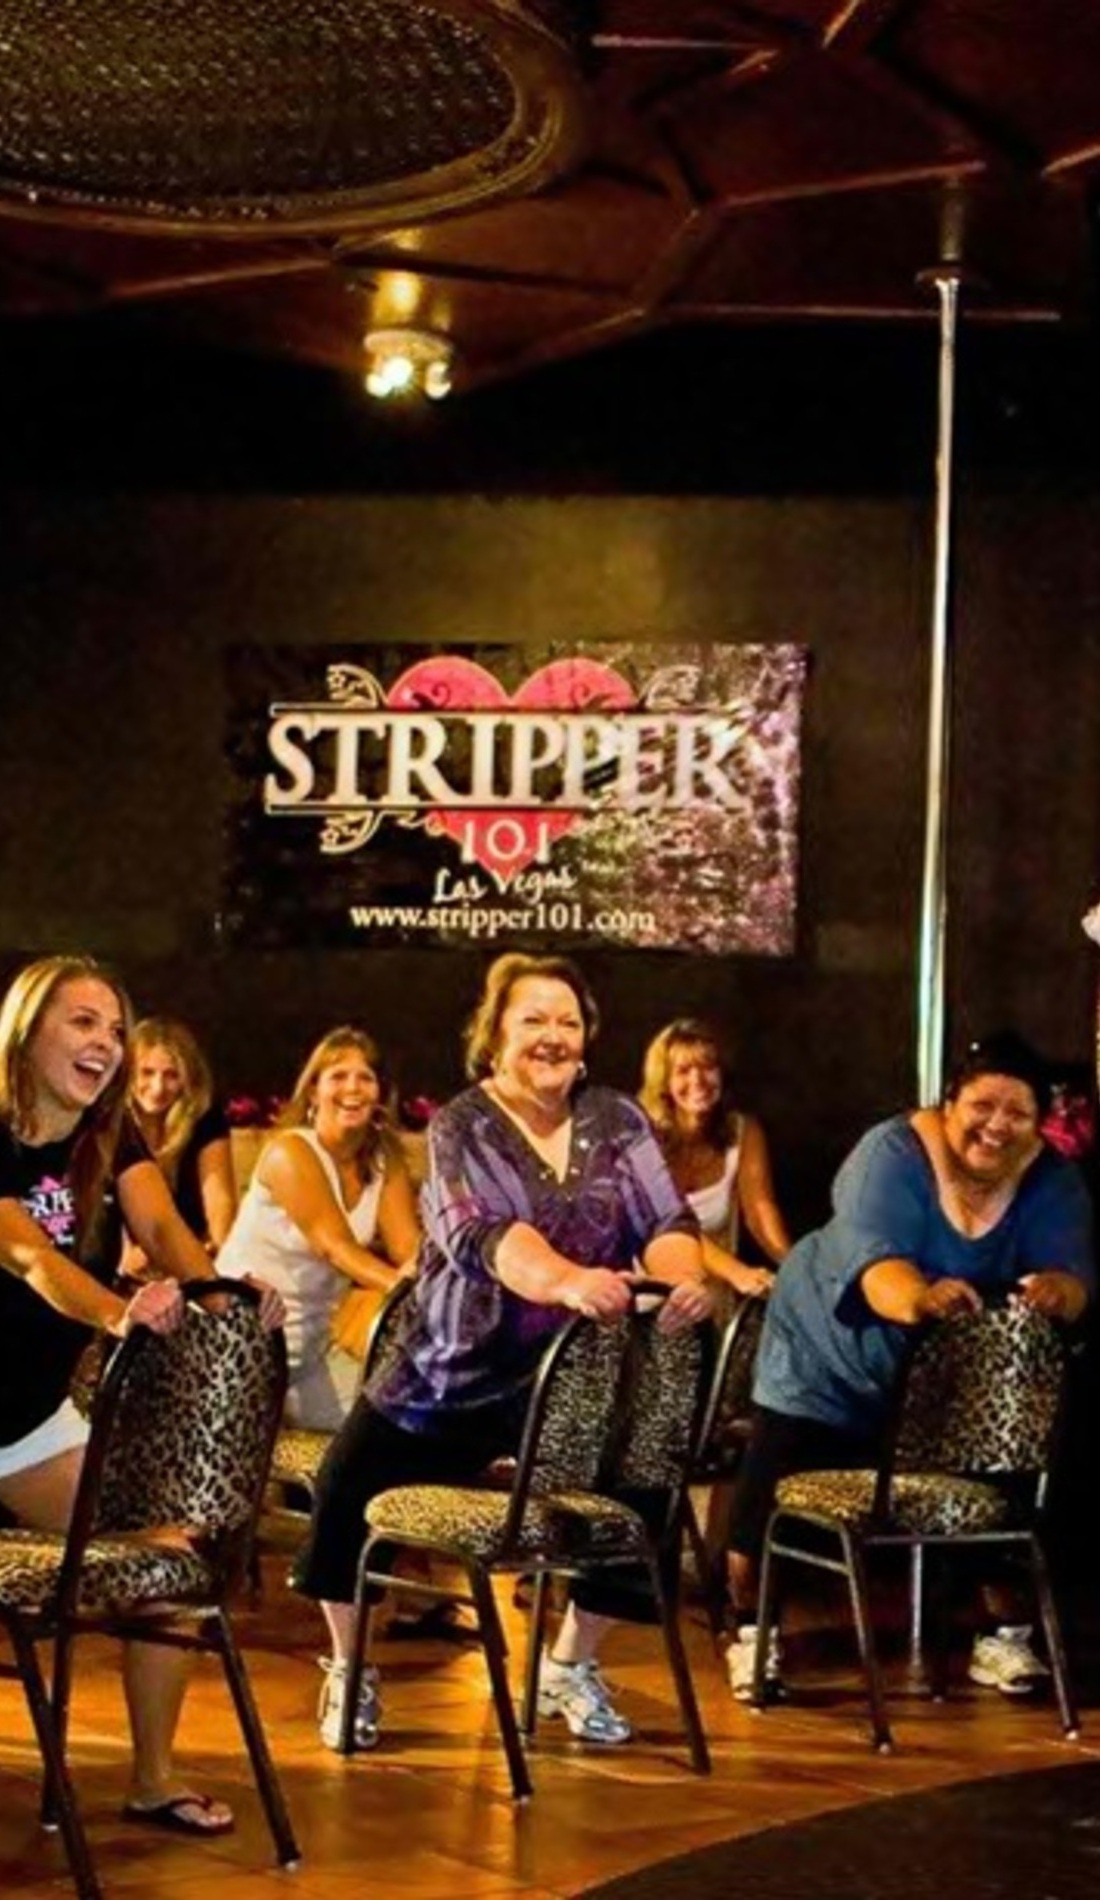 A Stripper 101 (Women Only Event) live event